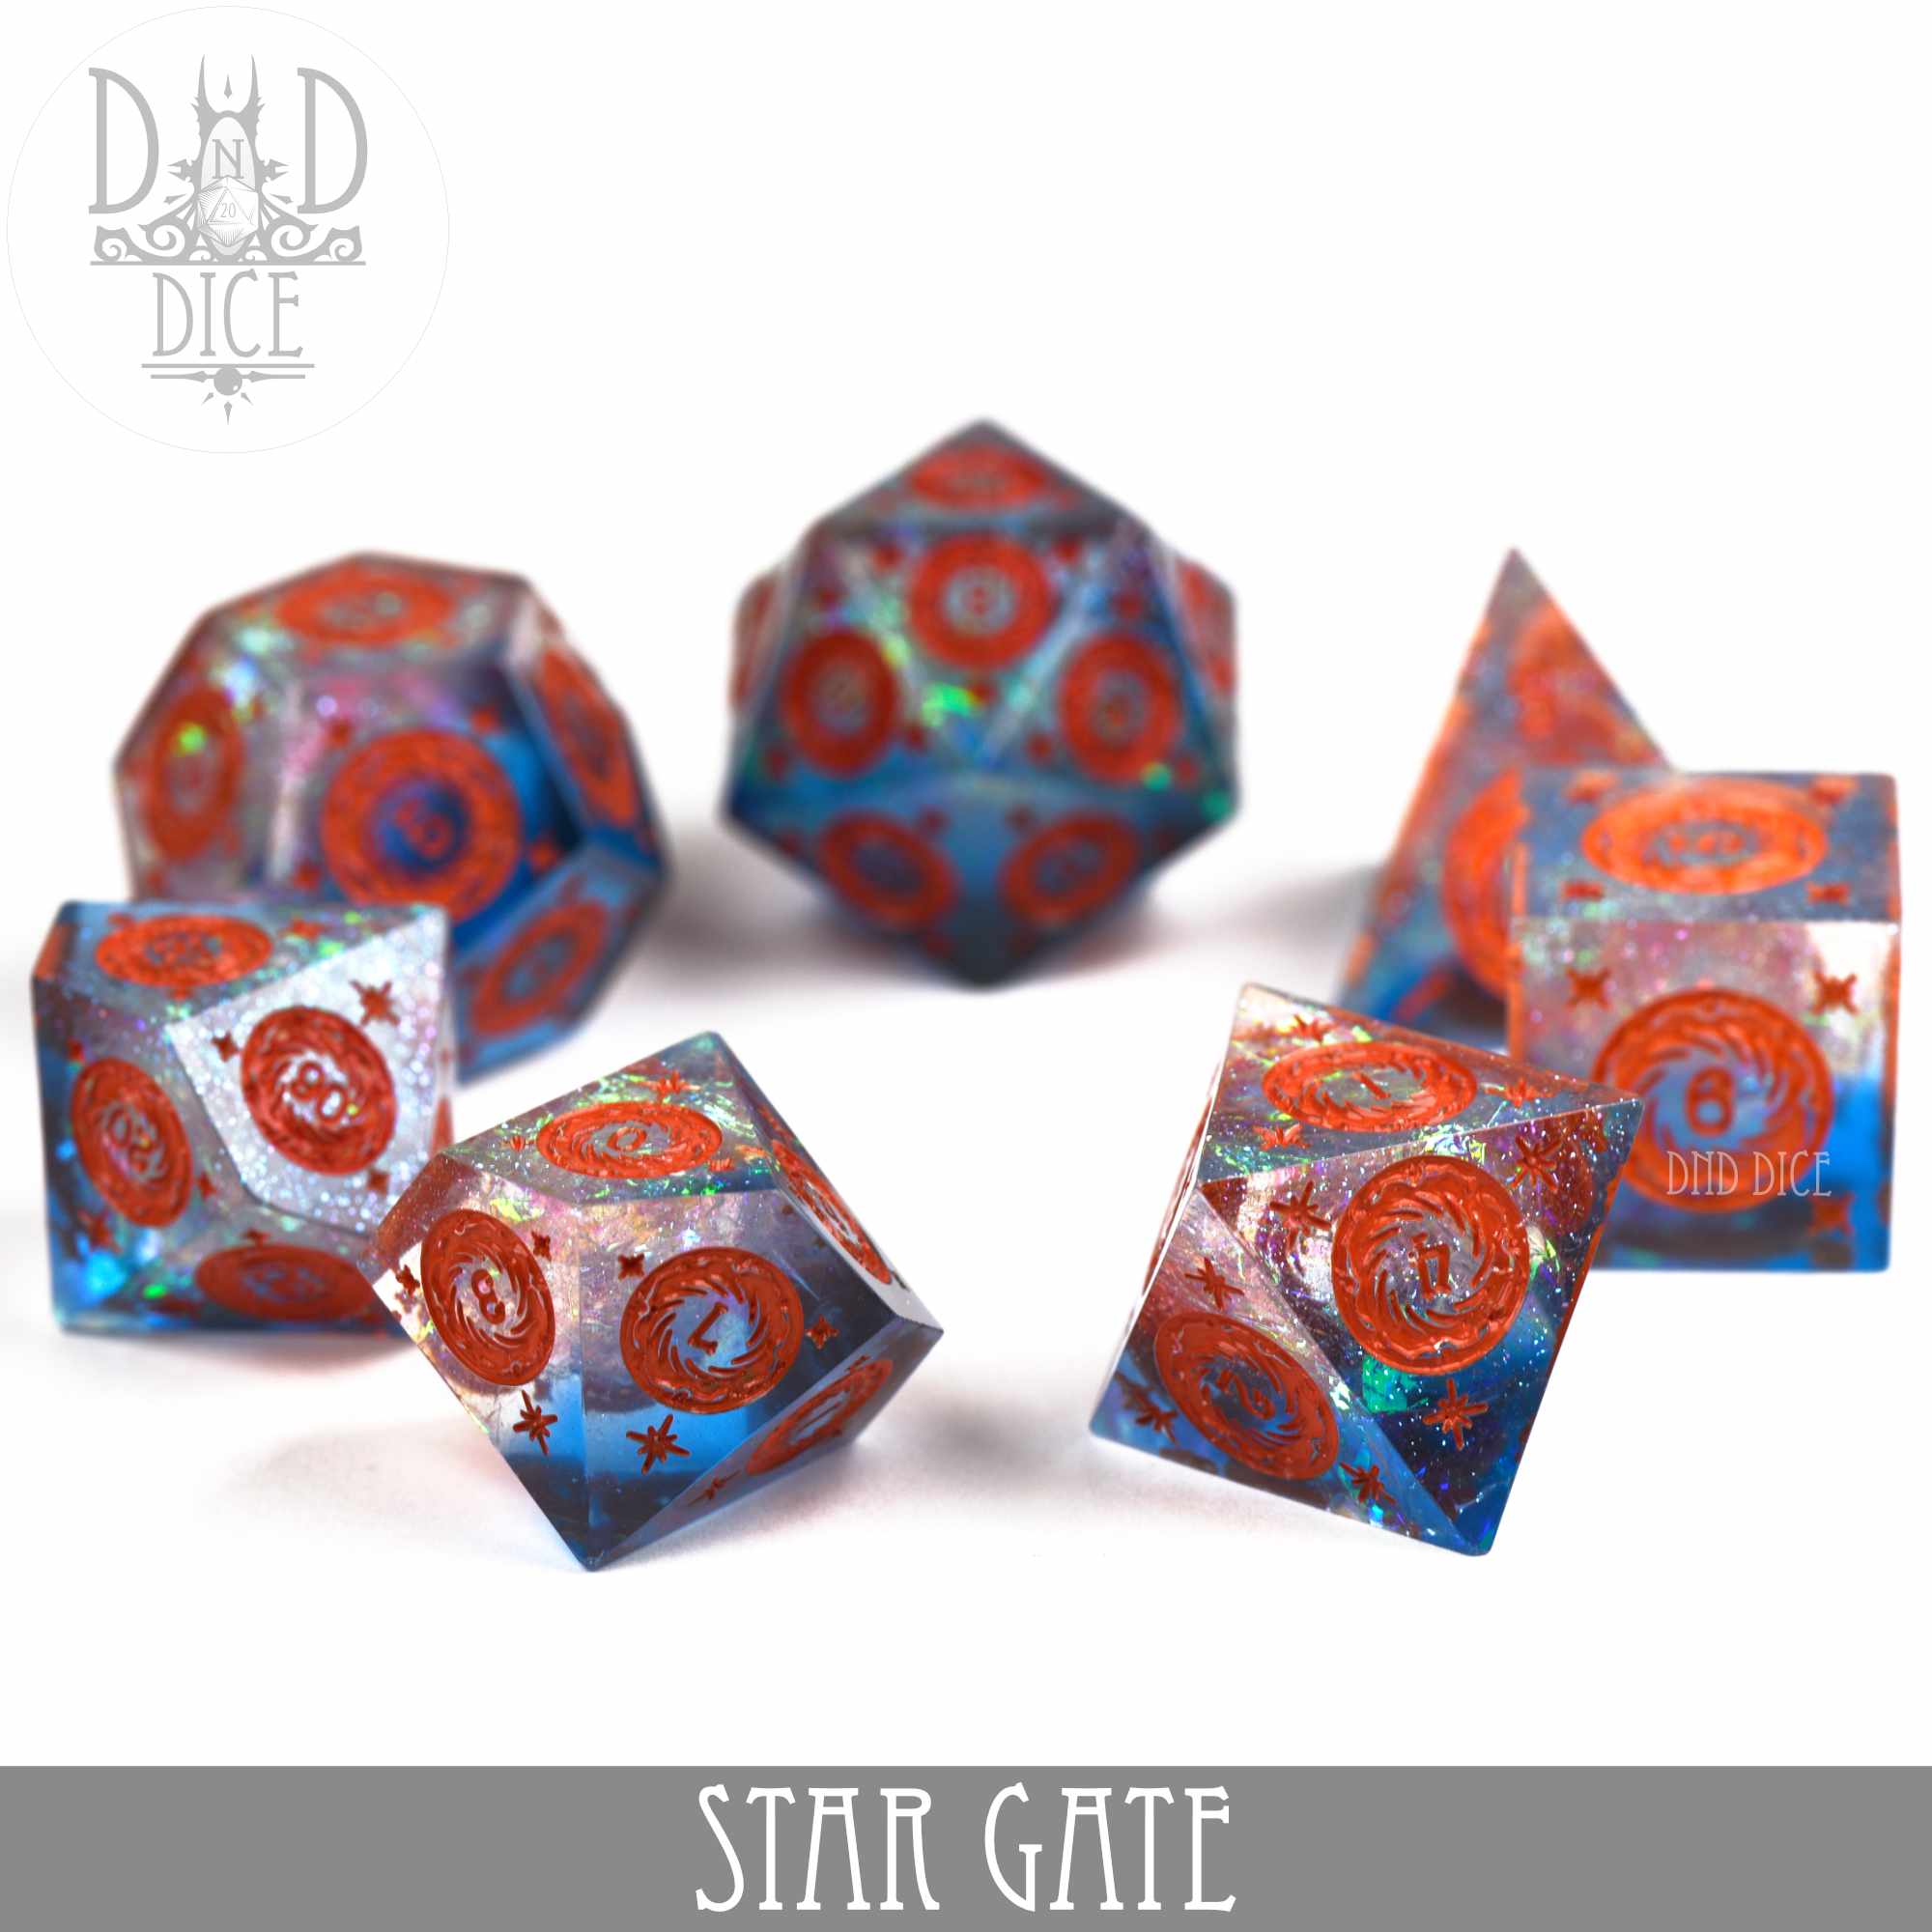 Star Gate Handmade Dice Set